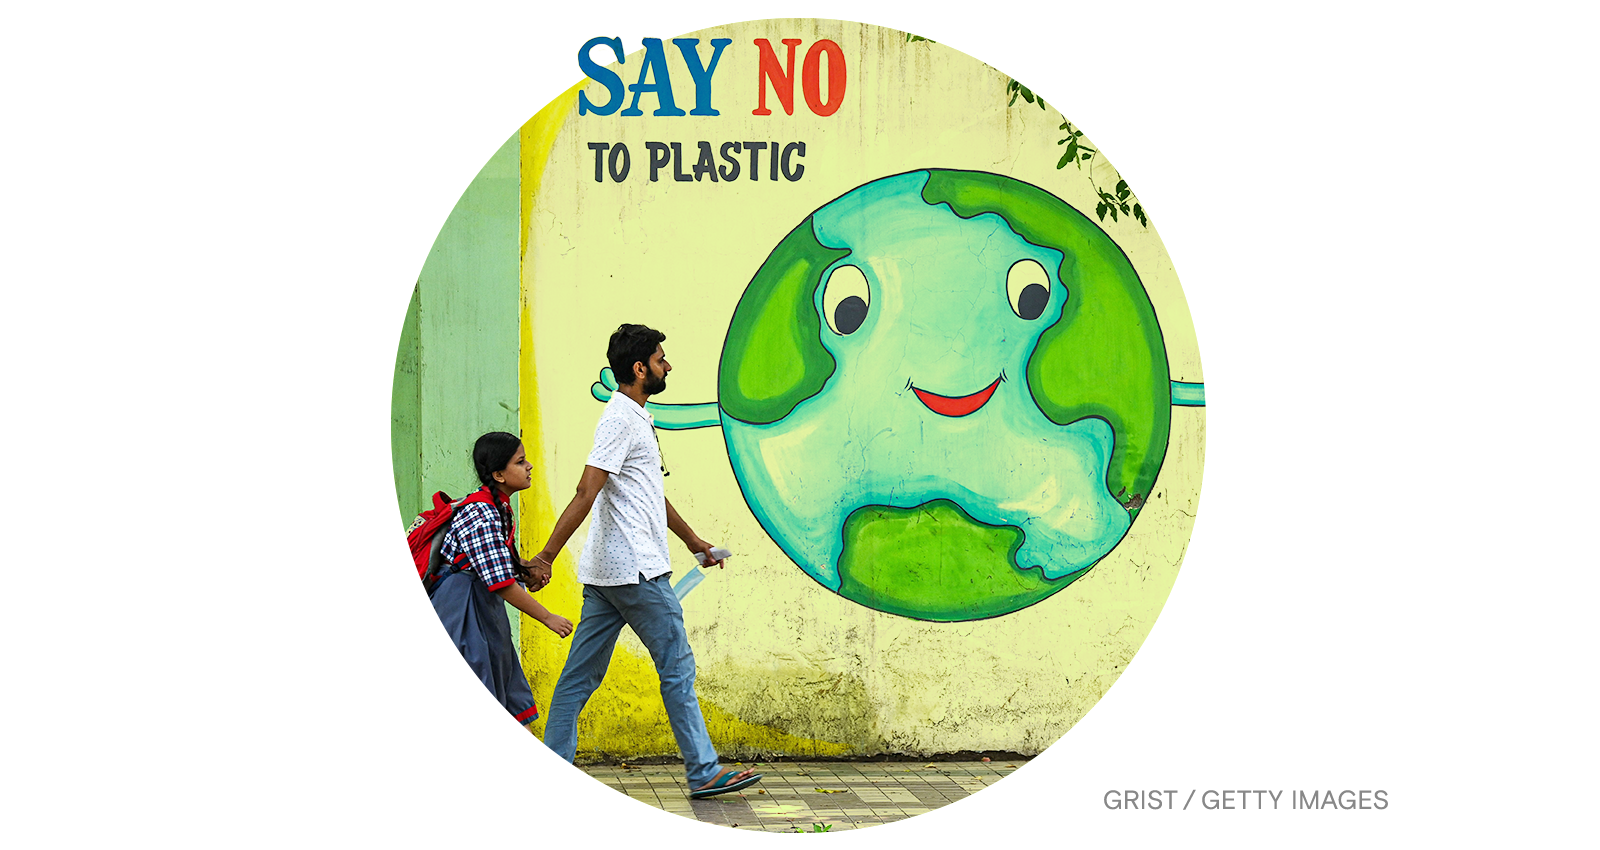 Plastic ban across Krishna district of Andhra Pradesh soon